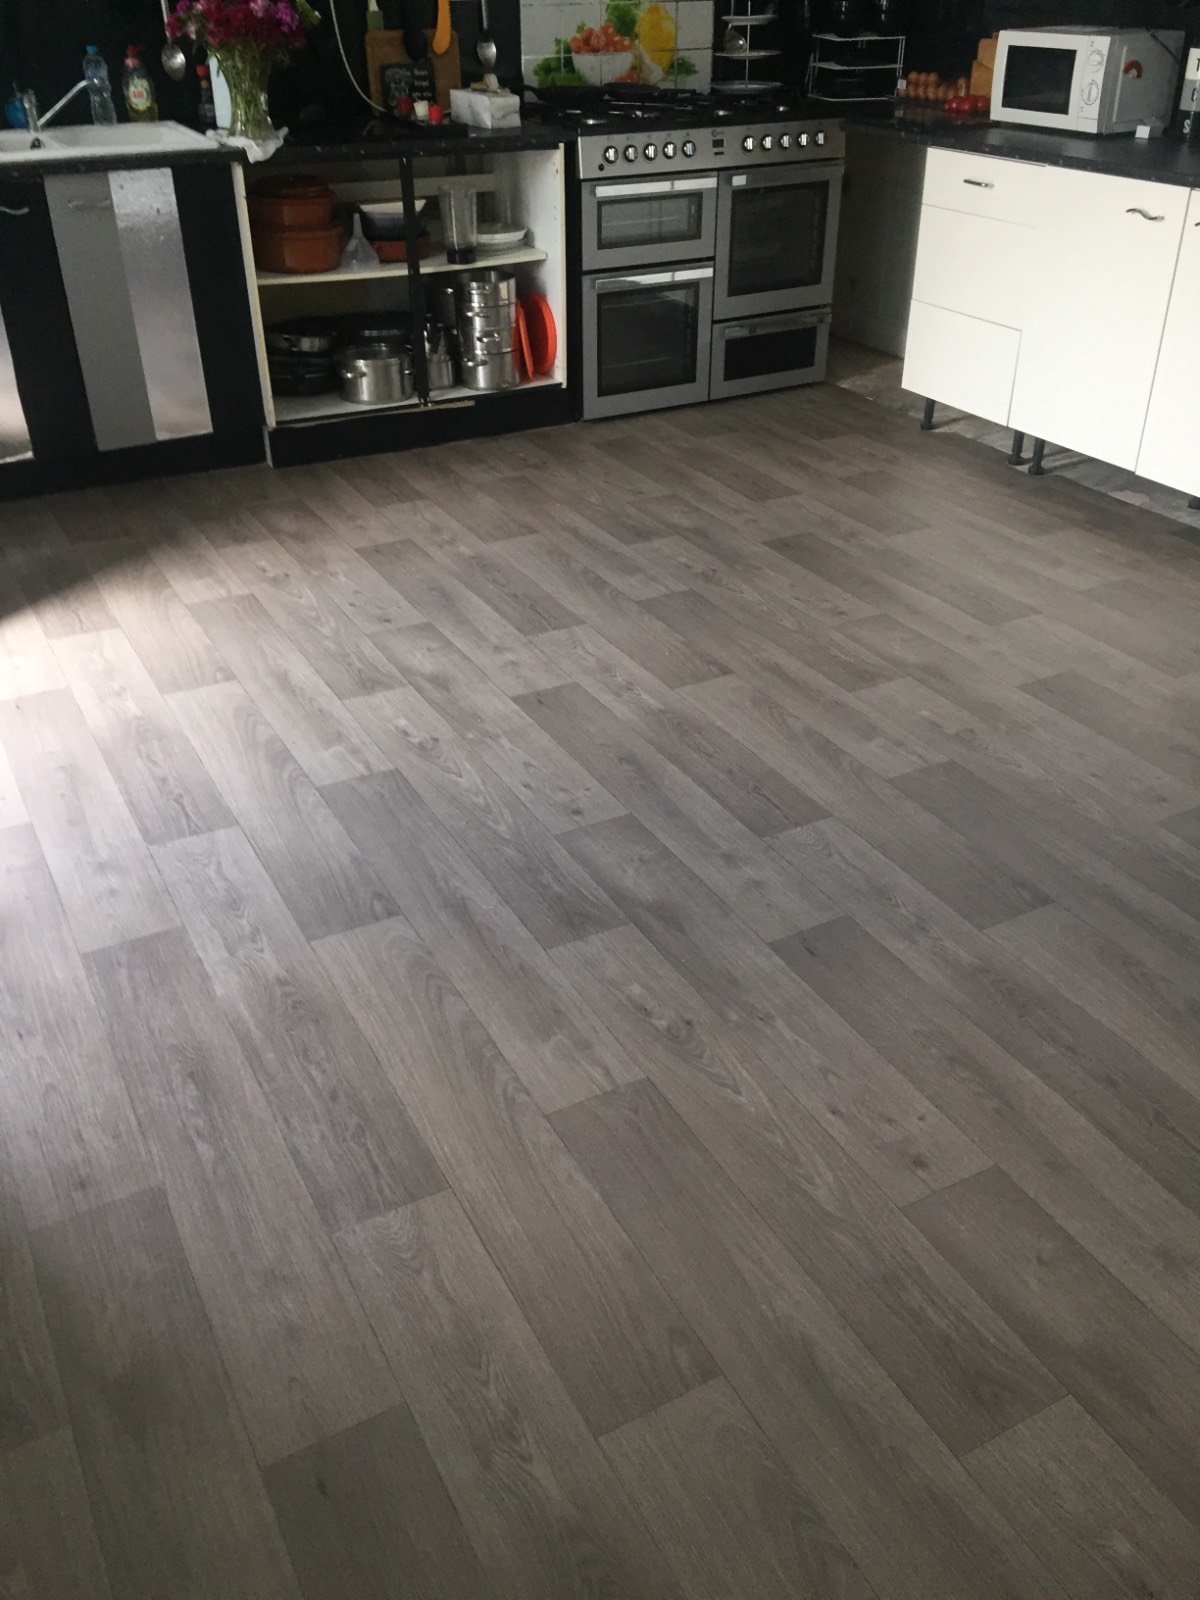 grey and brown vinyl flooring with wooden design in kitchen